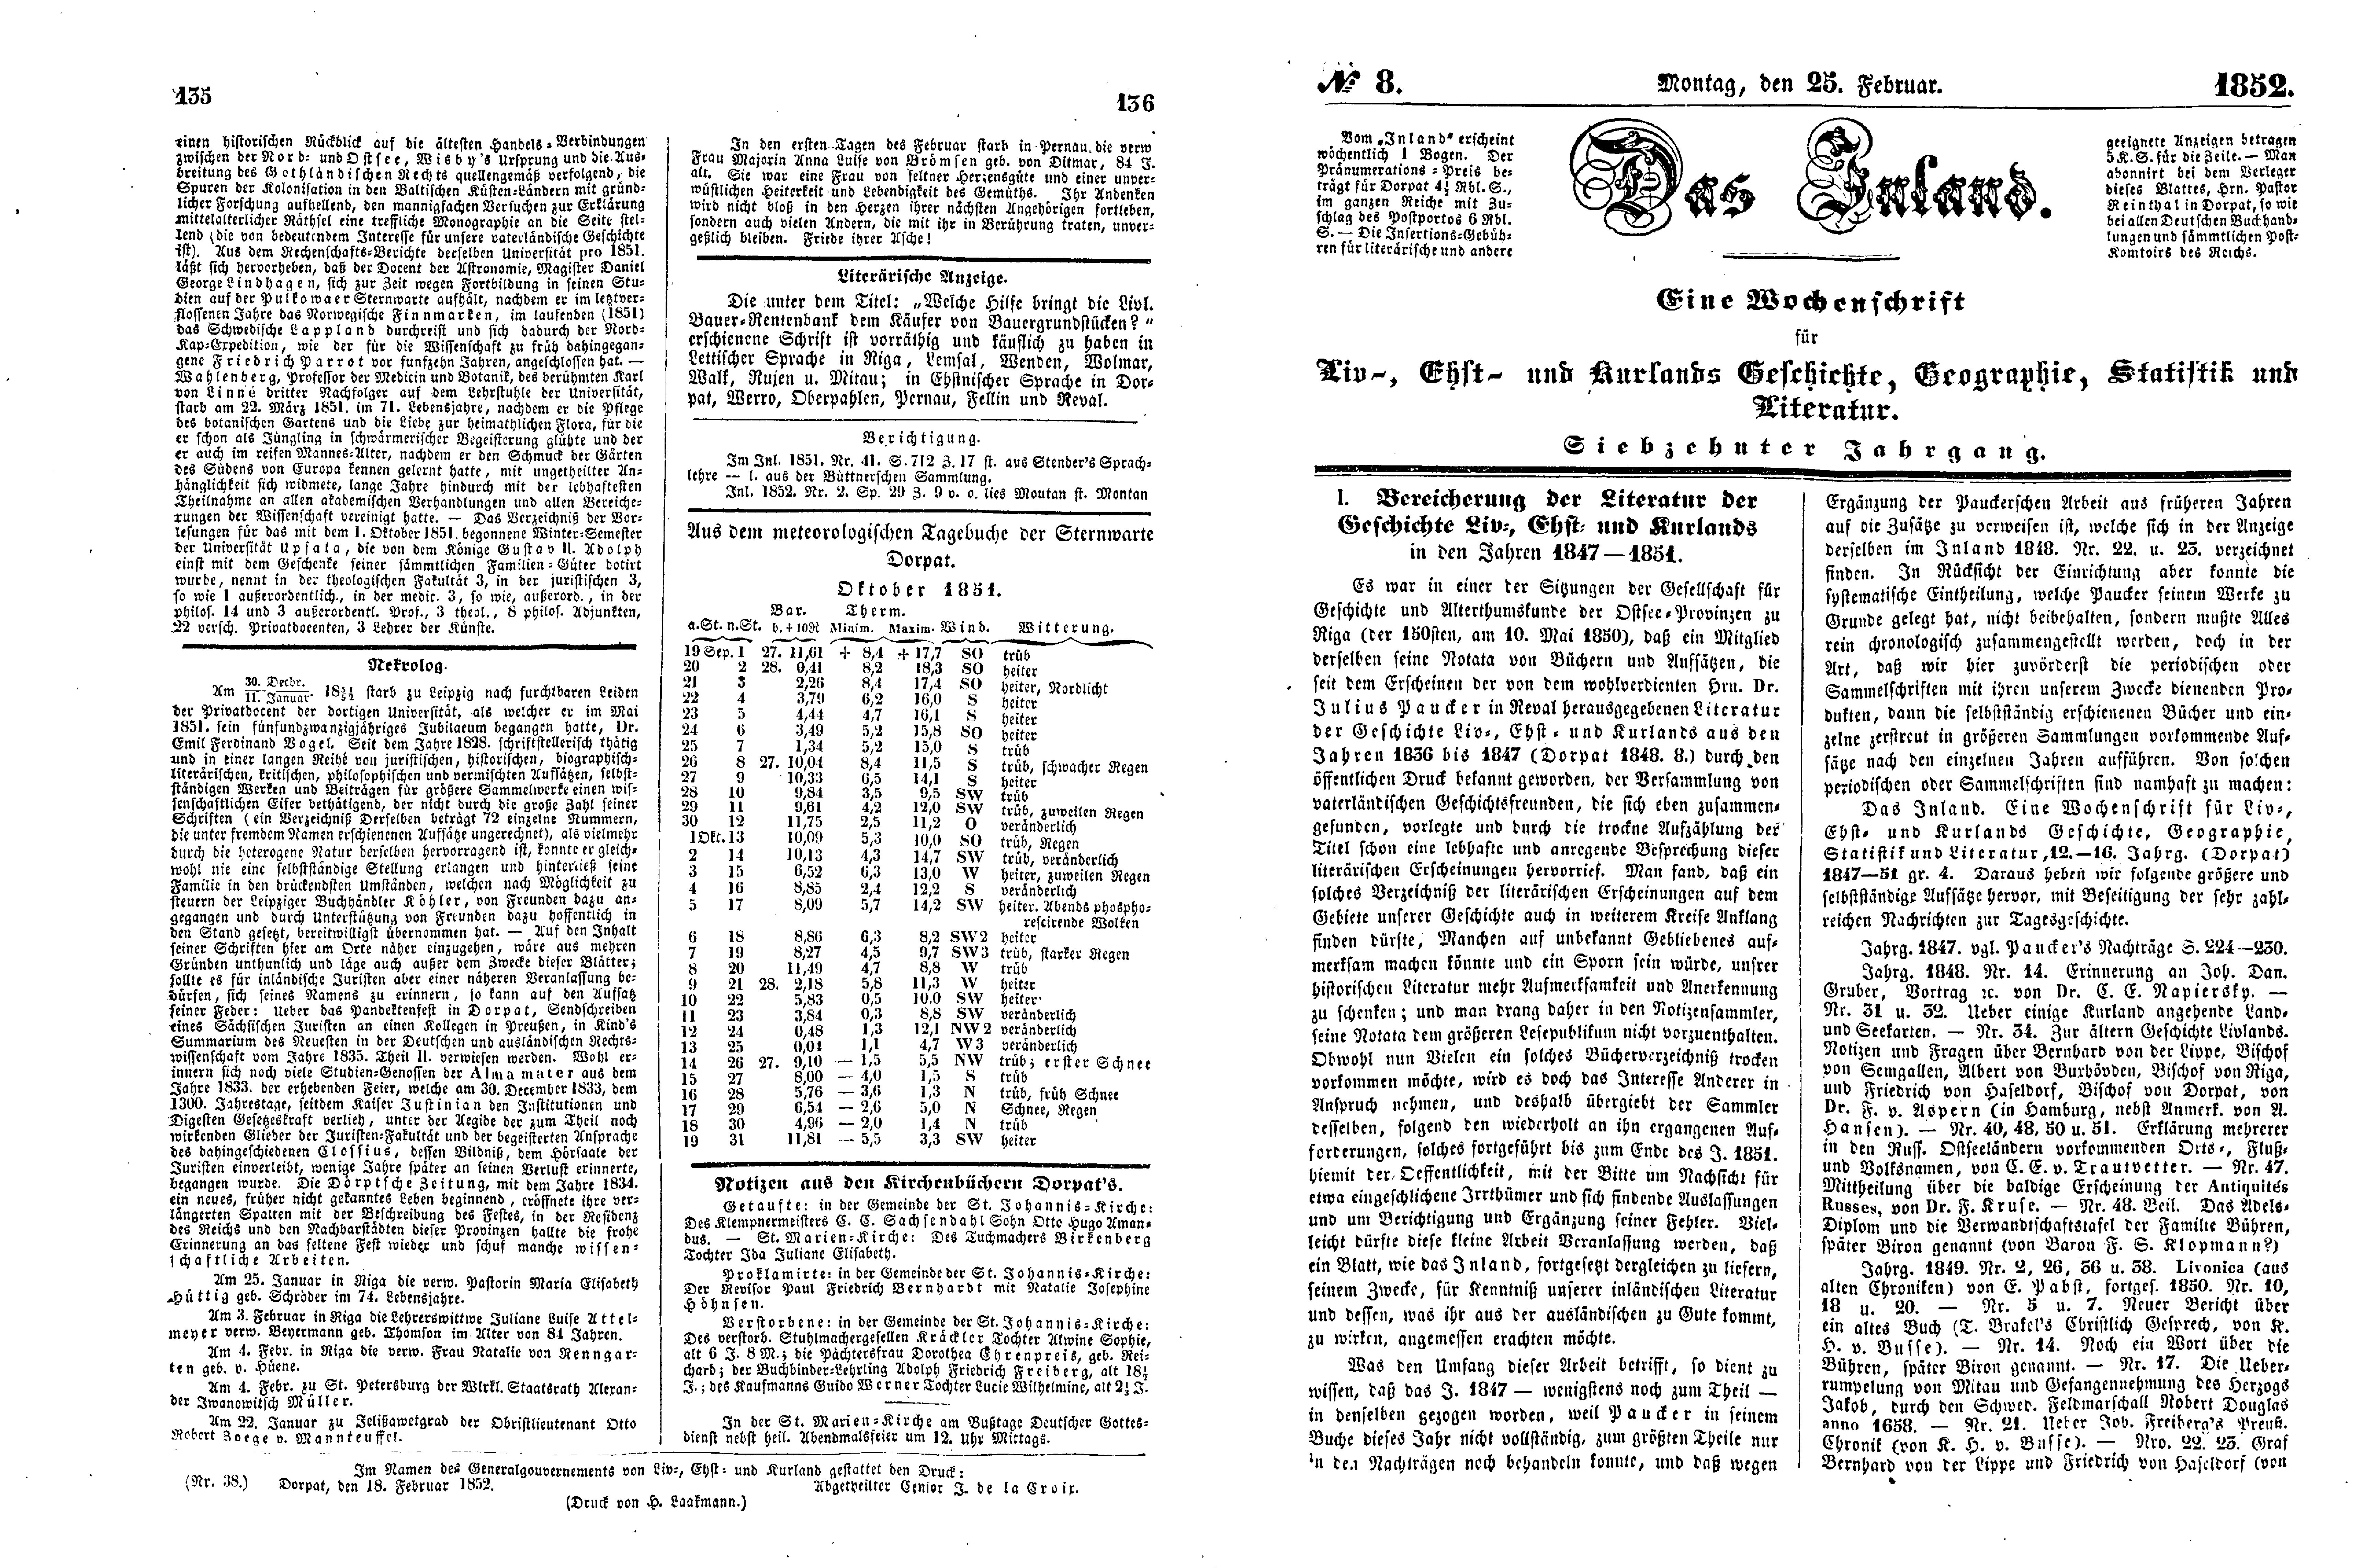 Das Inland [17] (1852) | 38. (135-138) Main body of text